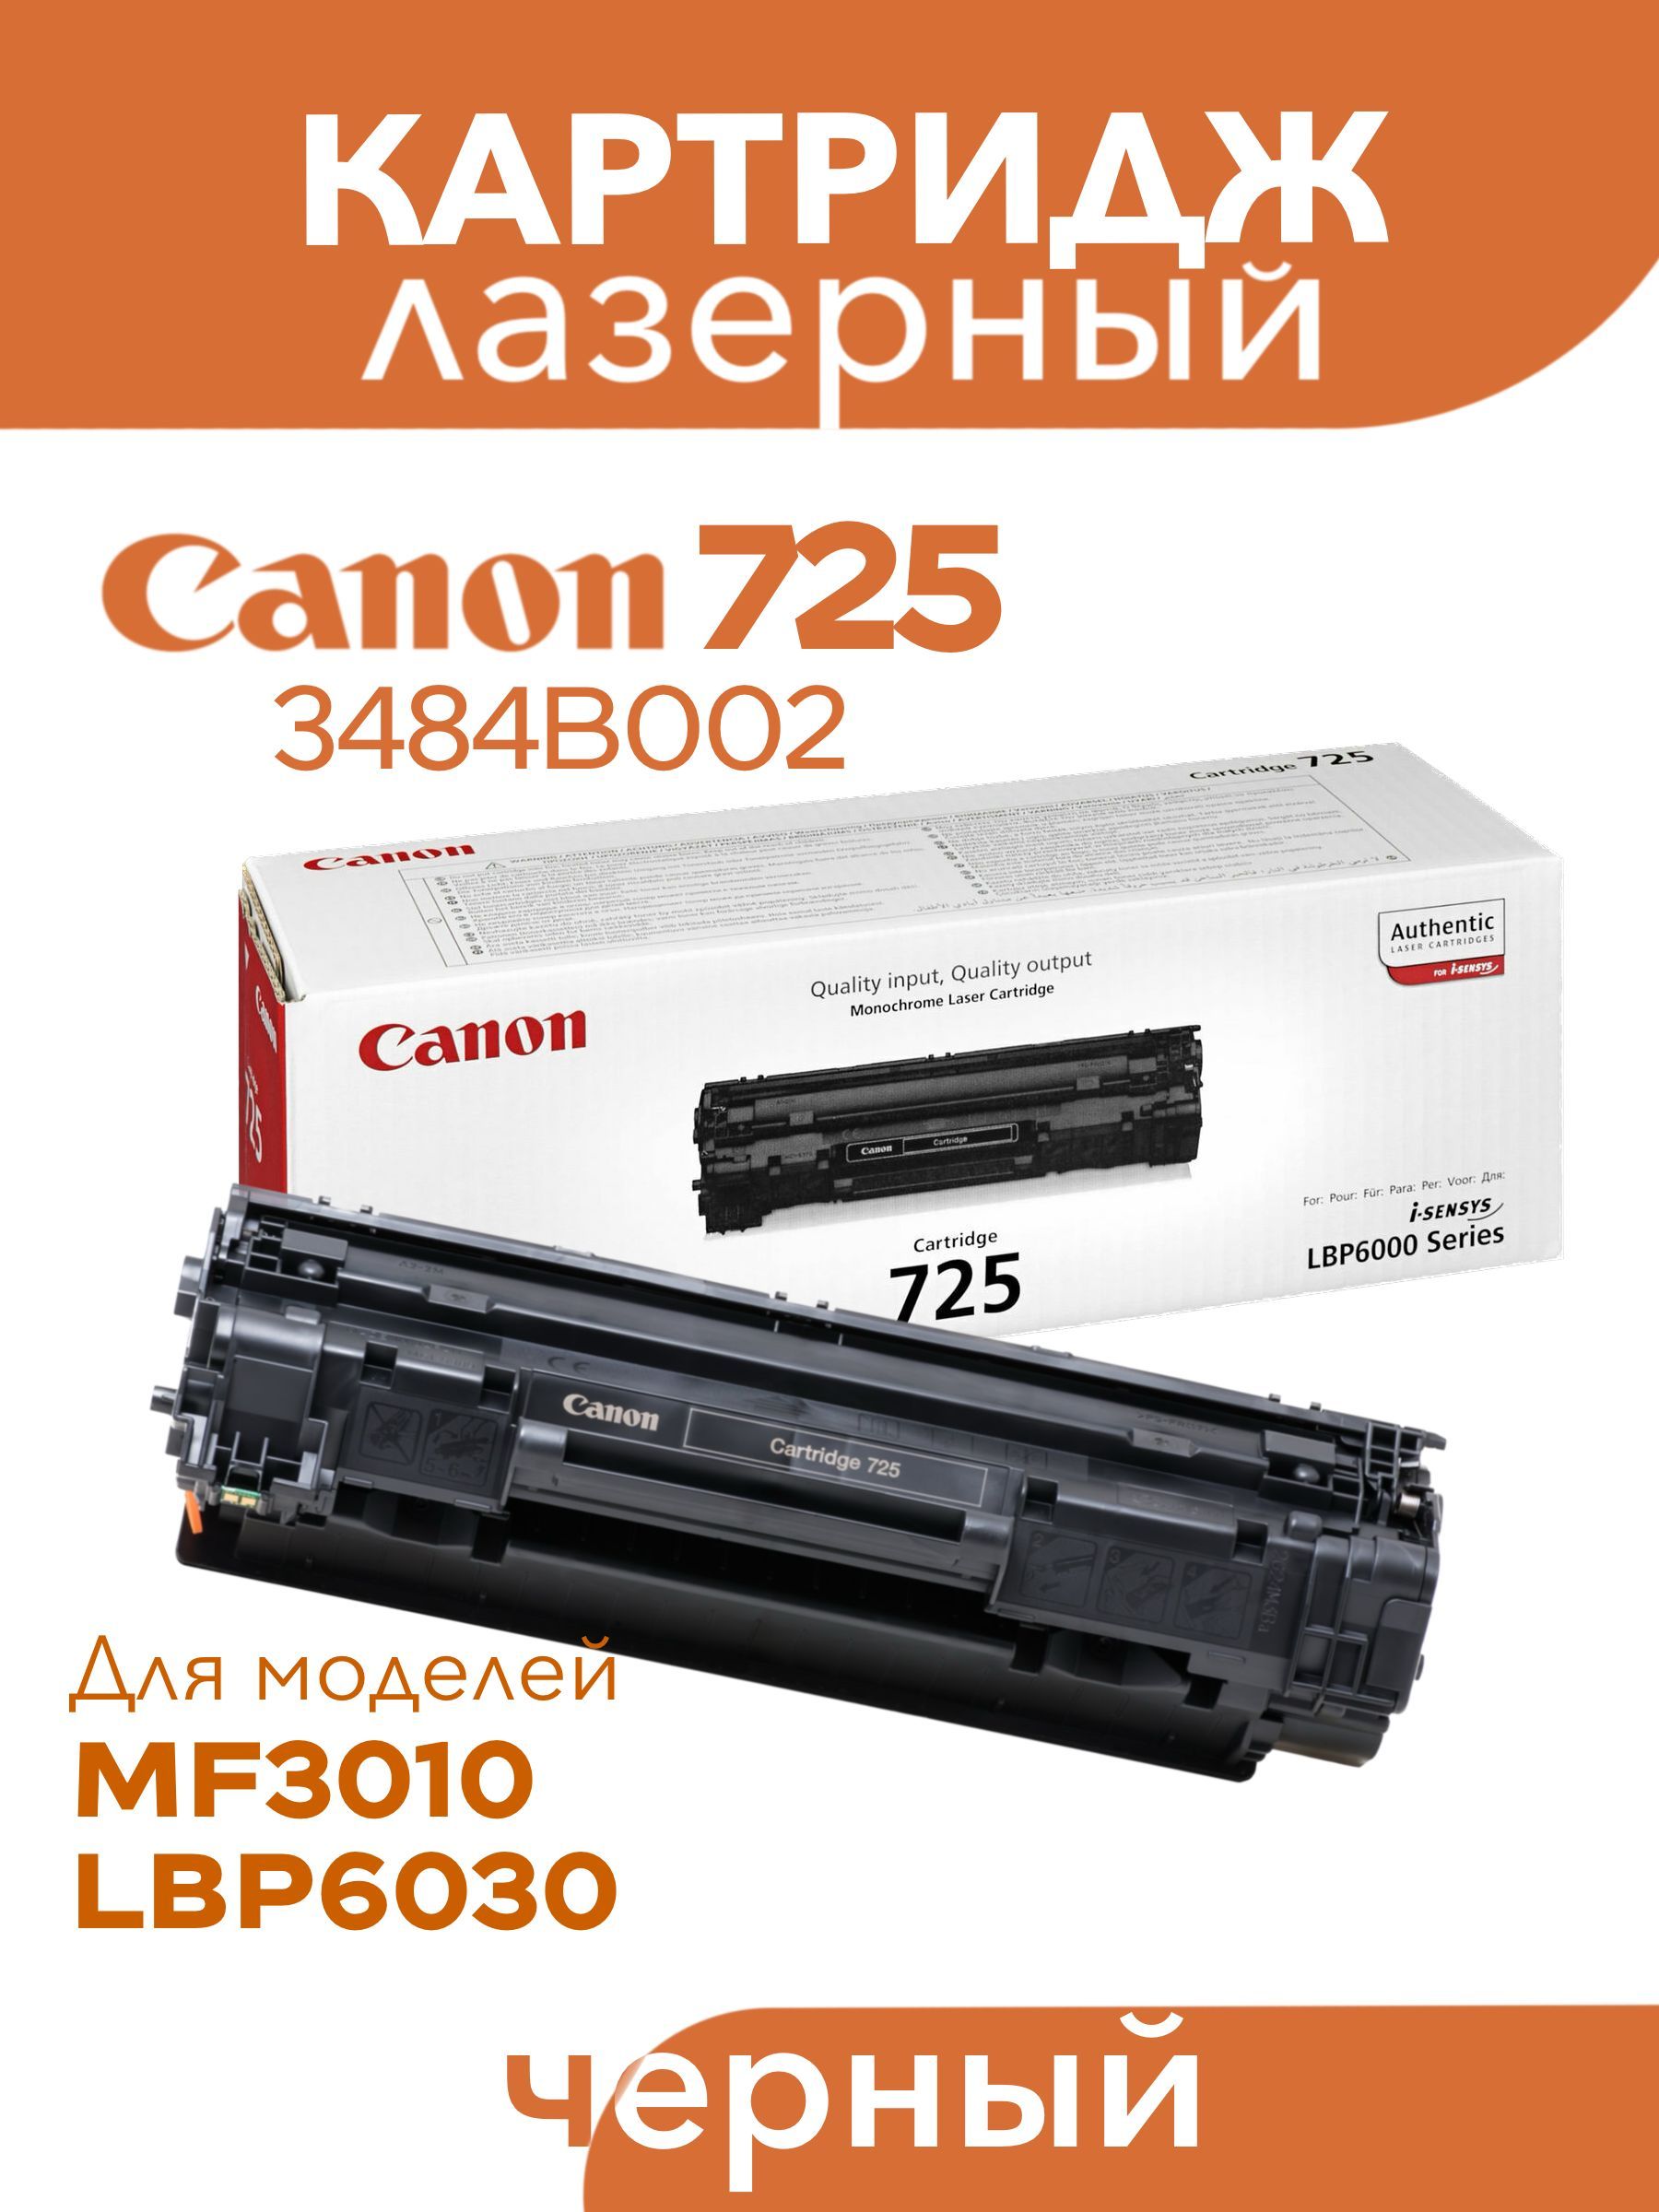 Canon cartridge 725. Canon 725 3484b005.. Картридж Canon 725. Black 725 картридж. Картридж Canon 725 (3484b005).